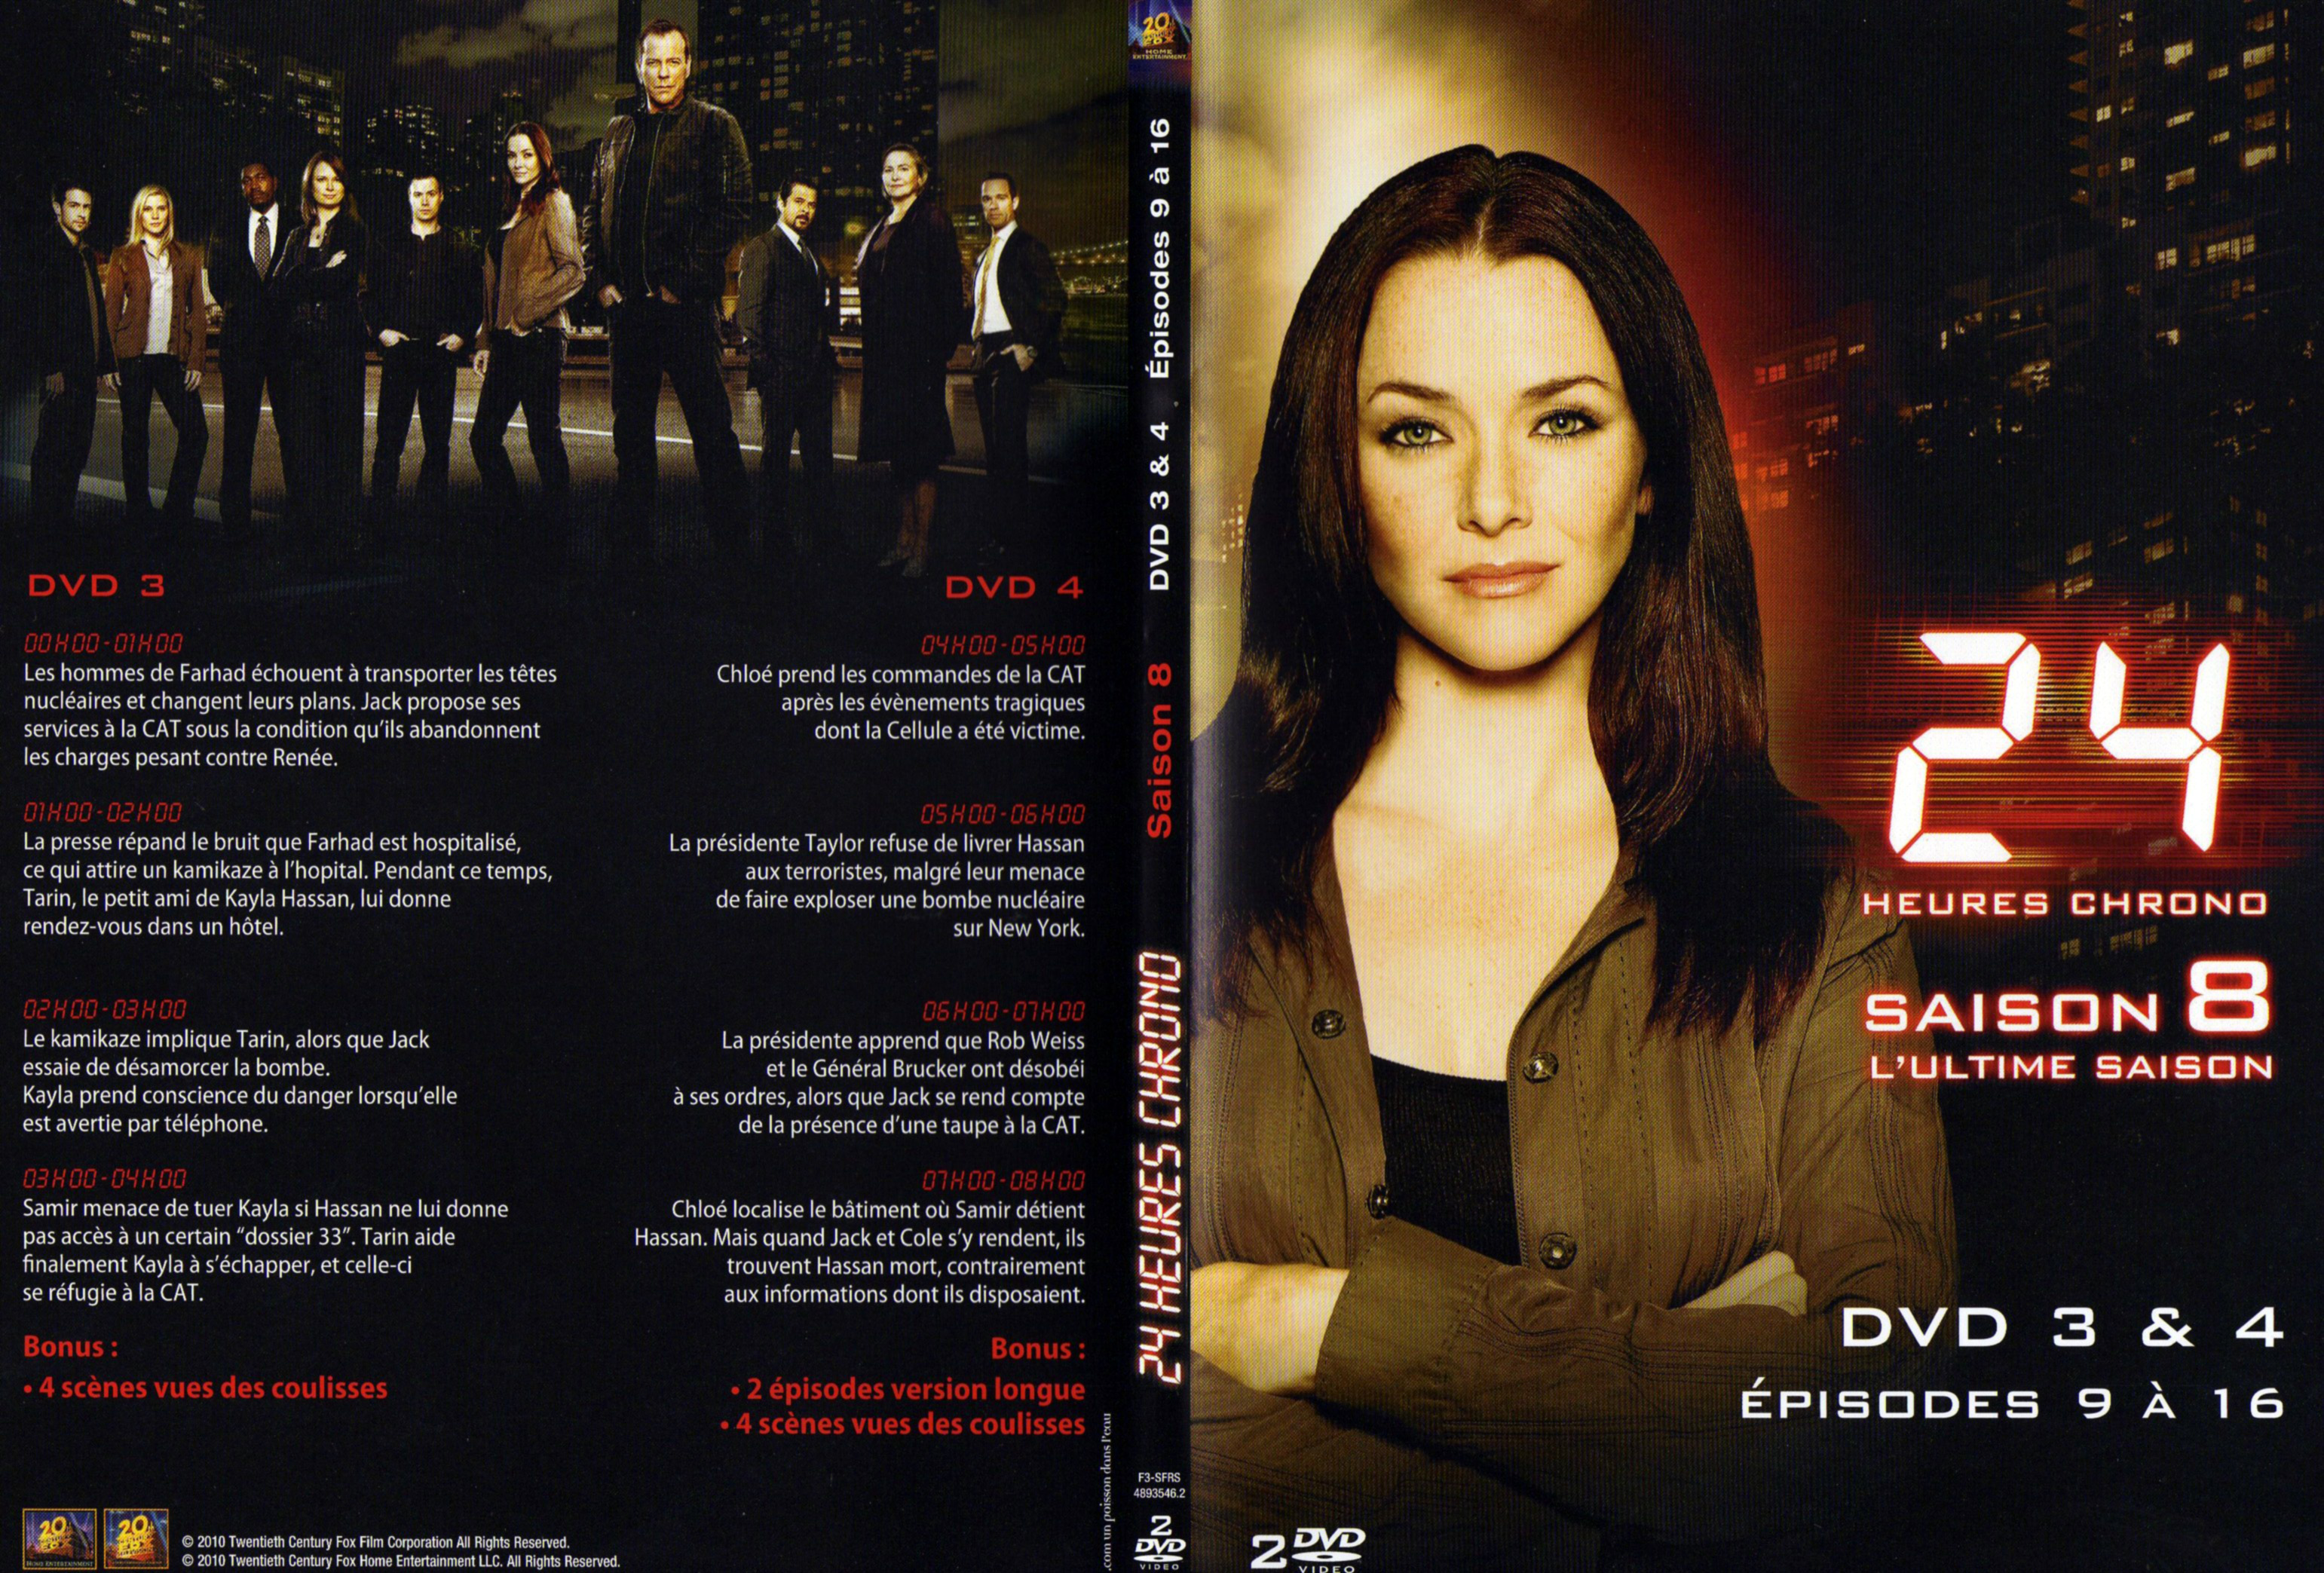 Jaquette DVD 24 heures chrono Saison 8 DVD 2